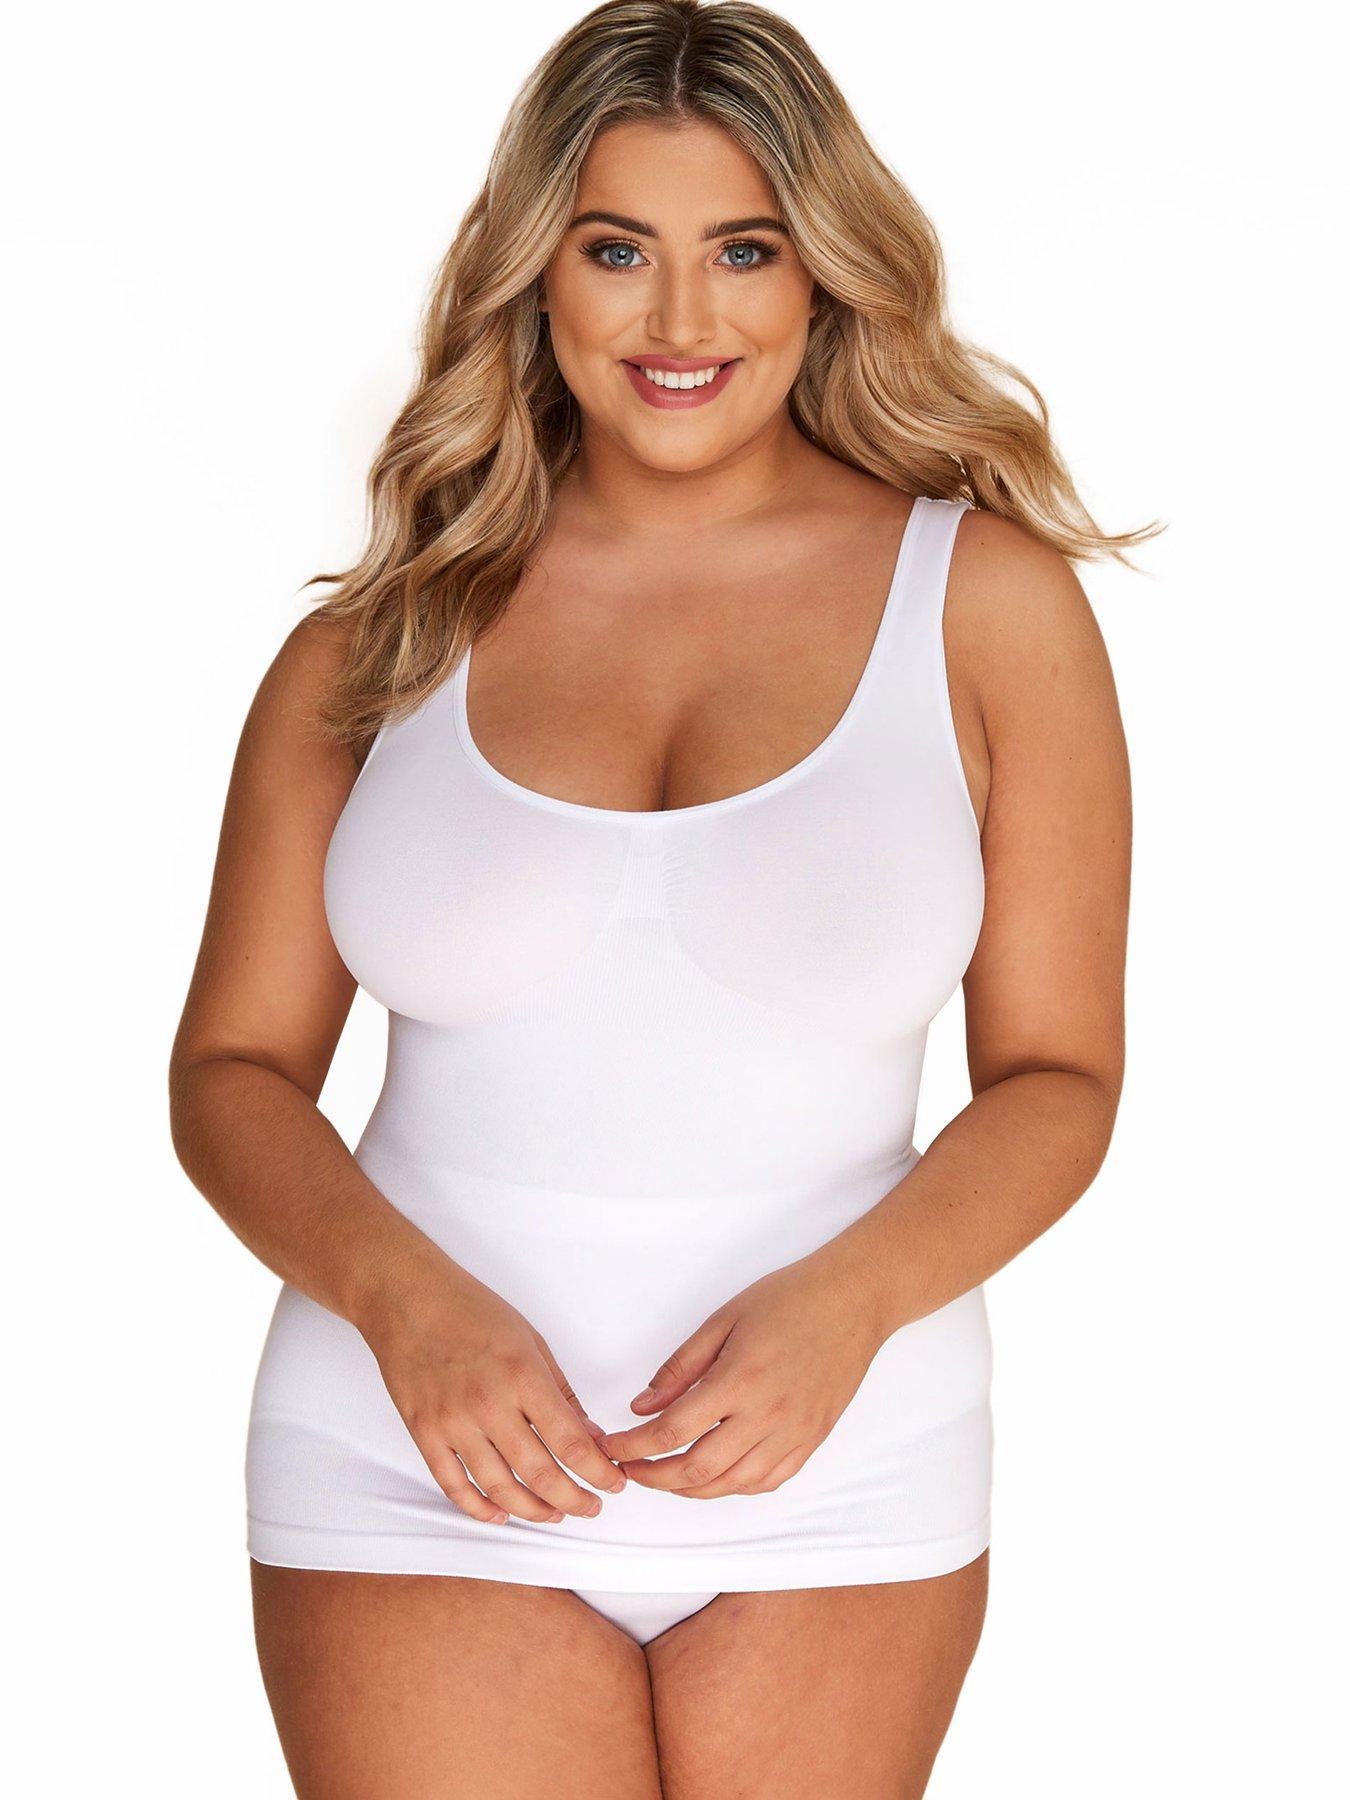 FULIER Slimming Cami Shaper Women's Tummy Control Tank Top Bra